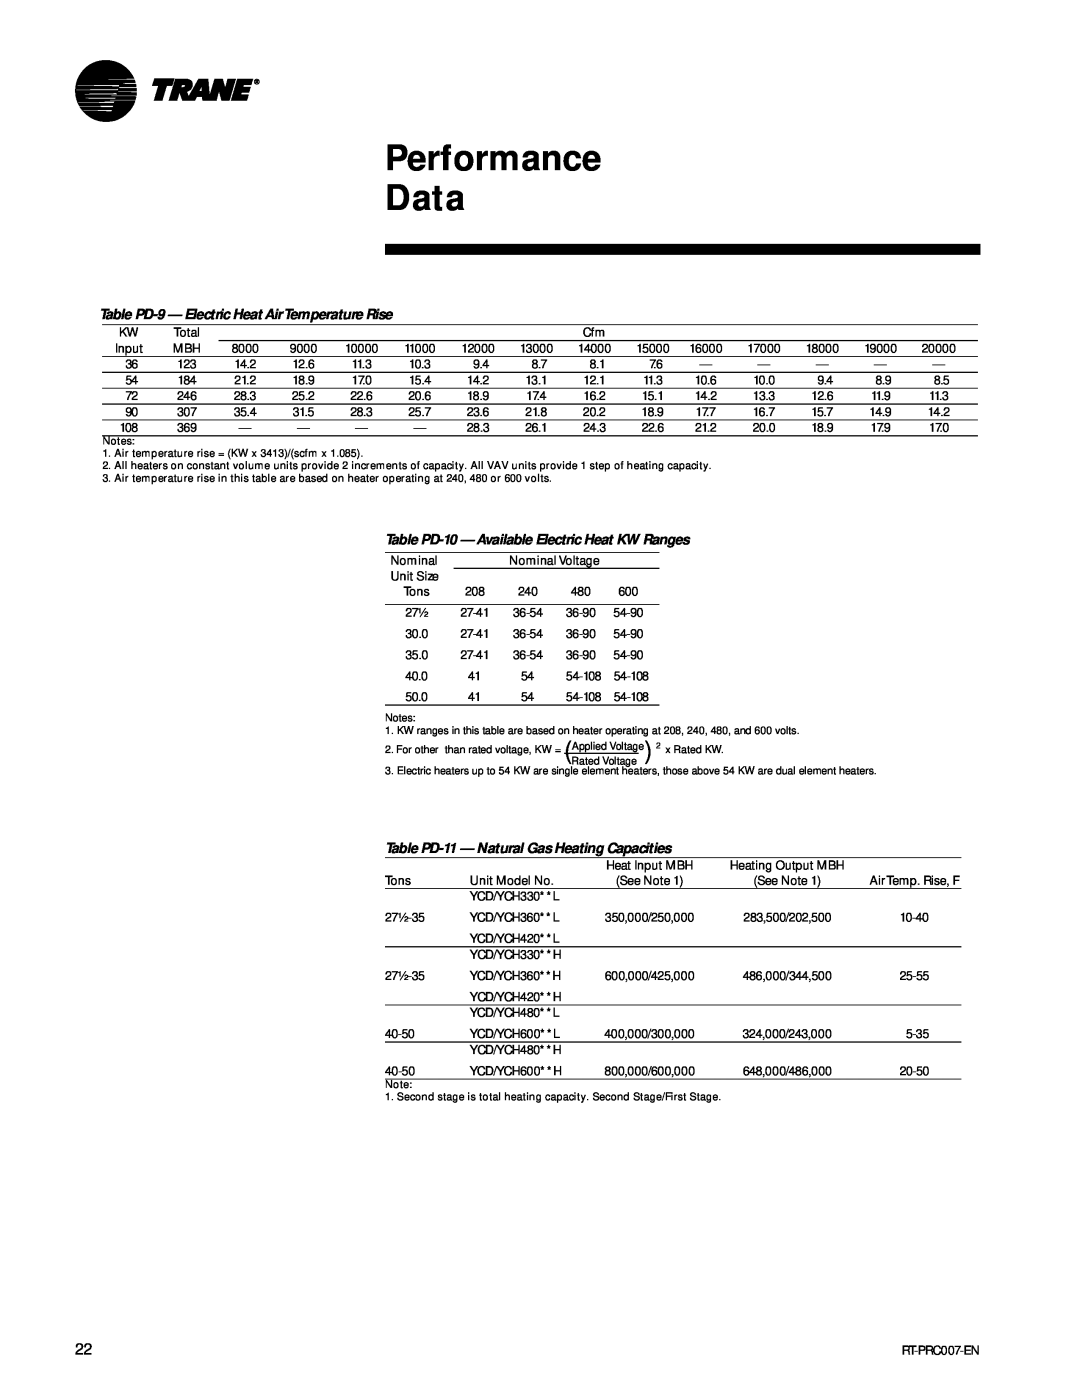 Trane RT-PRC007-EN manual Performance Data, Table PD-9- Electric Heat AirTemperature Rise 